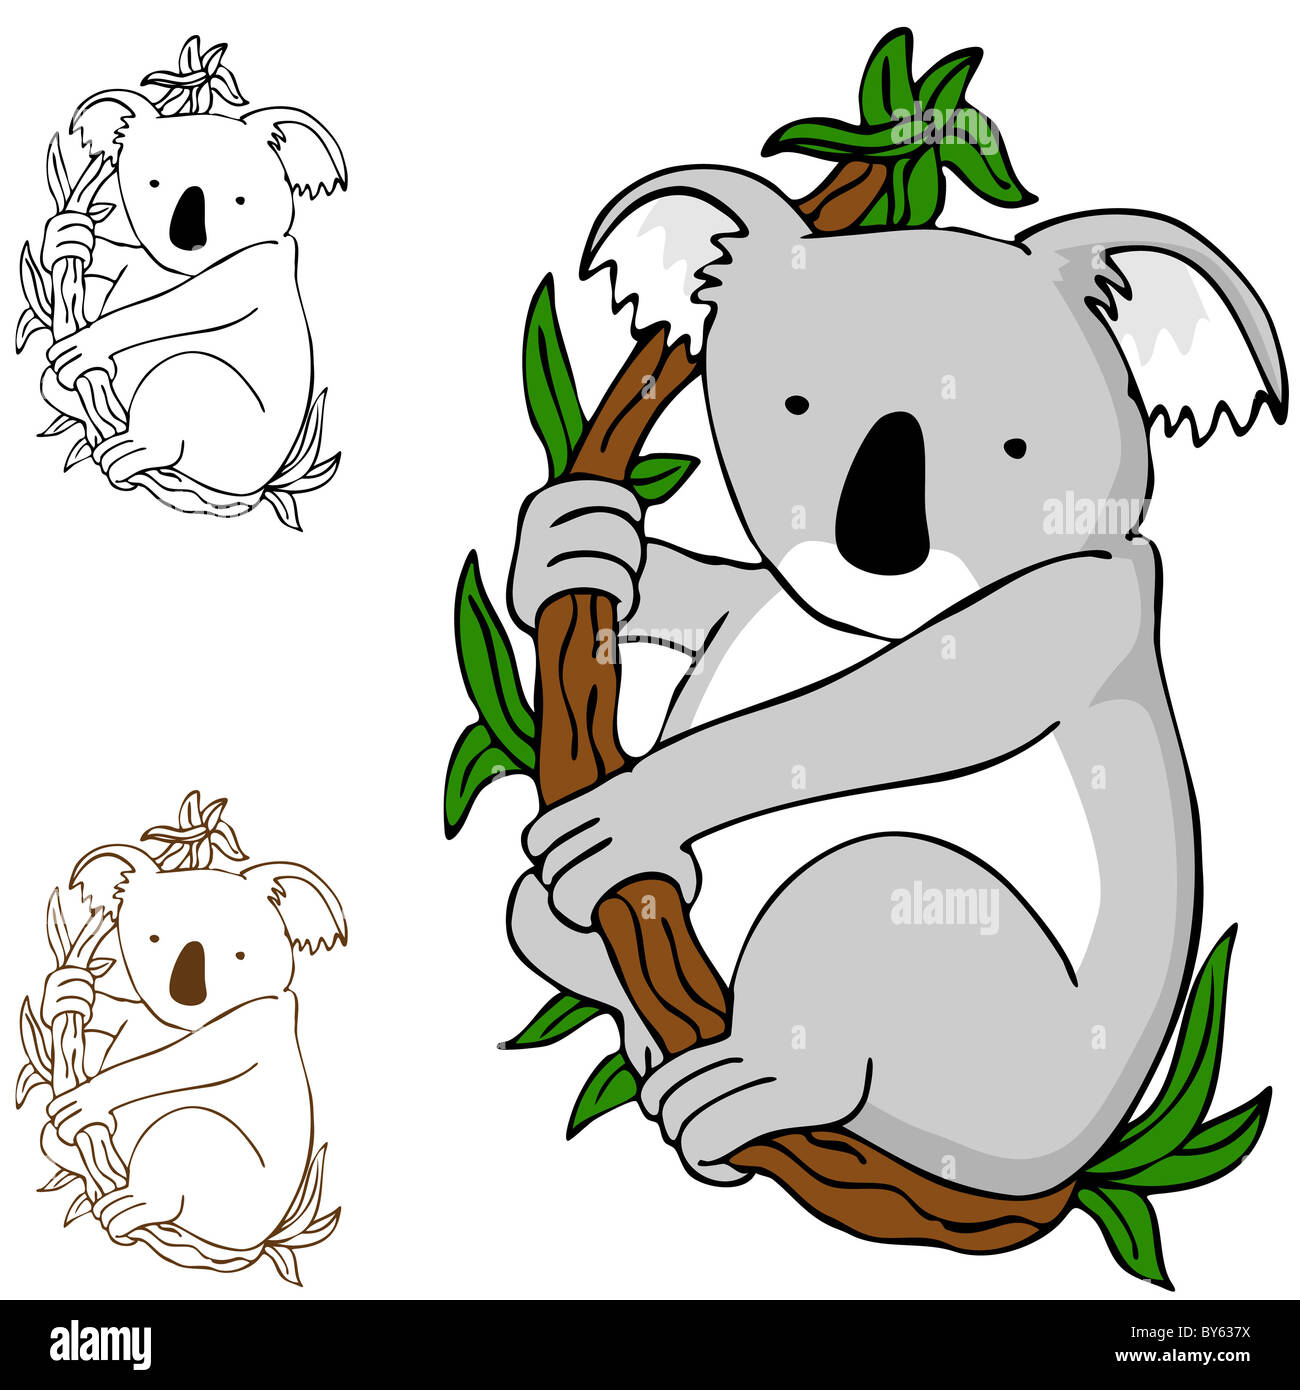 An image of a koala cartoon drawing Stock Photo - Alamy